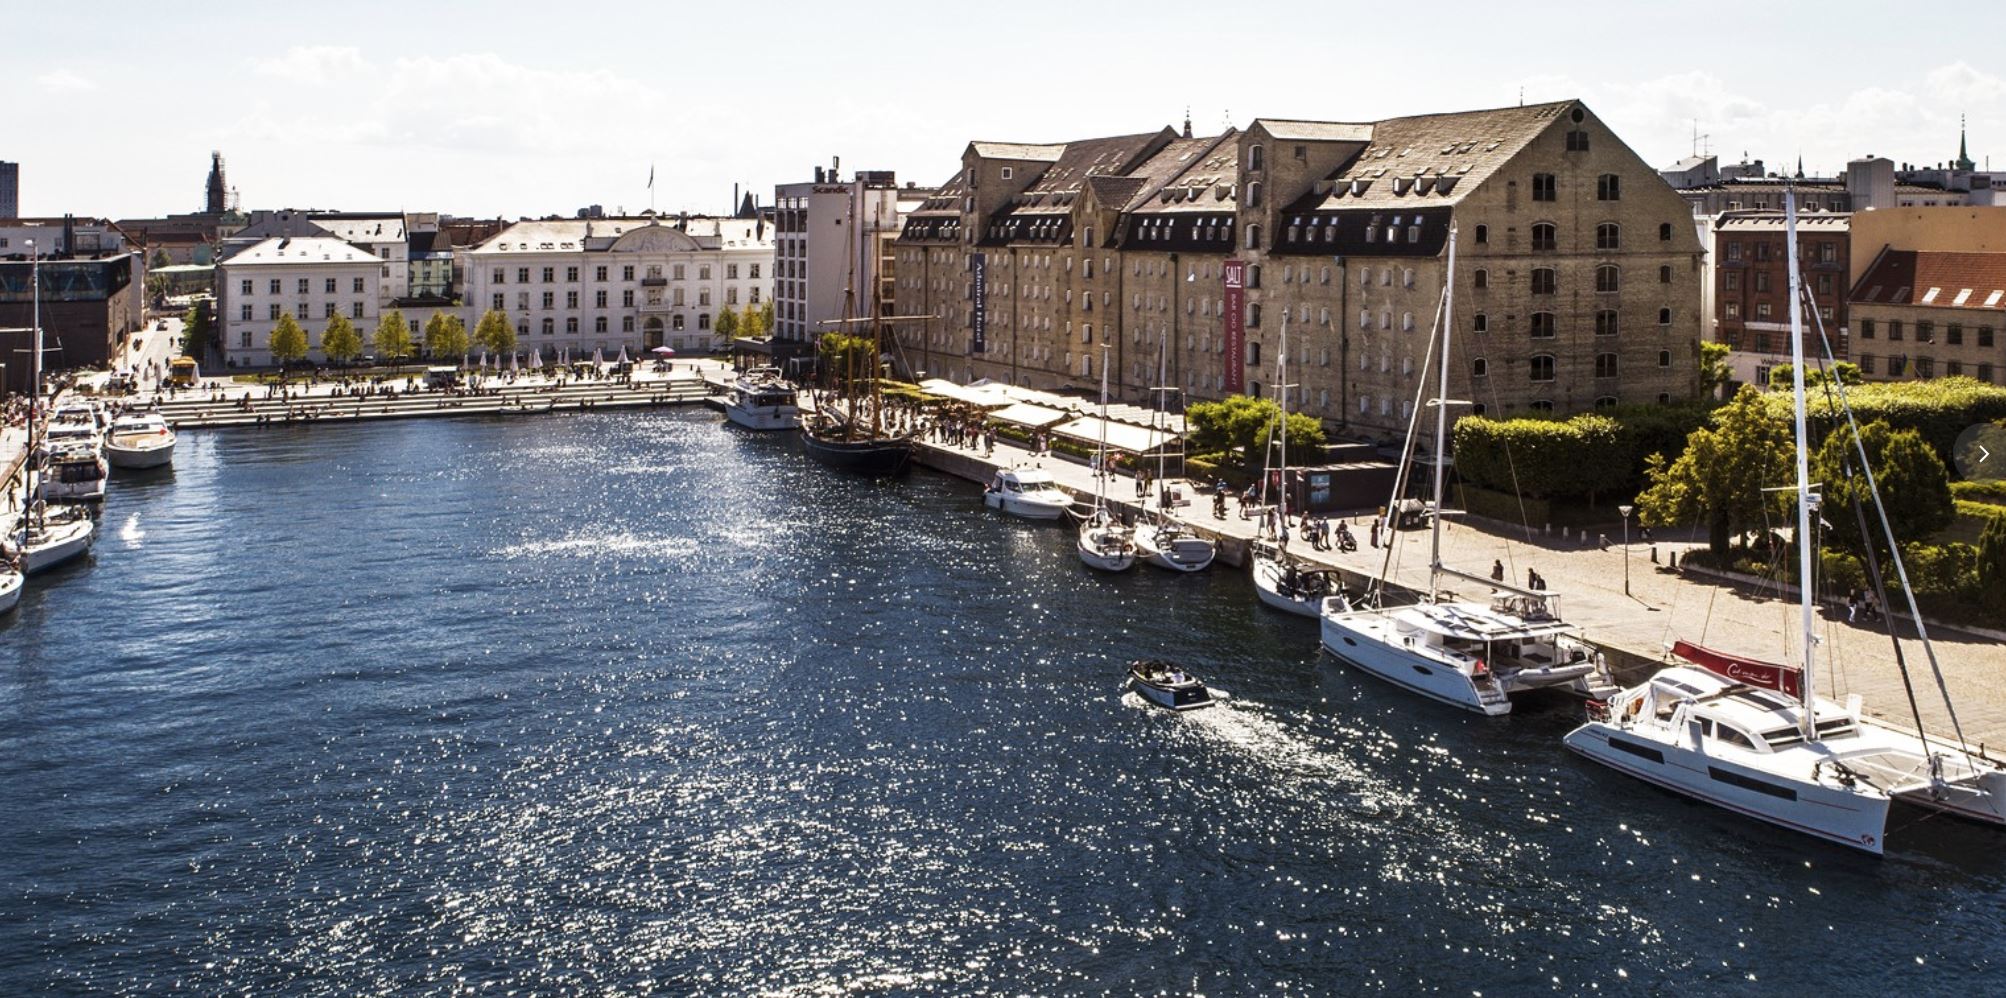 Hotels near Copenhagen Cruise Port